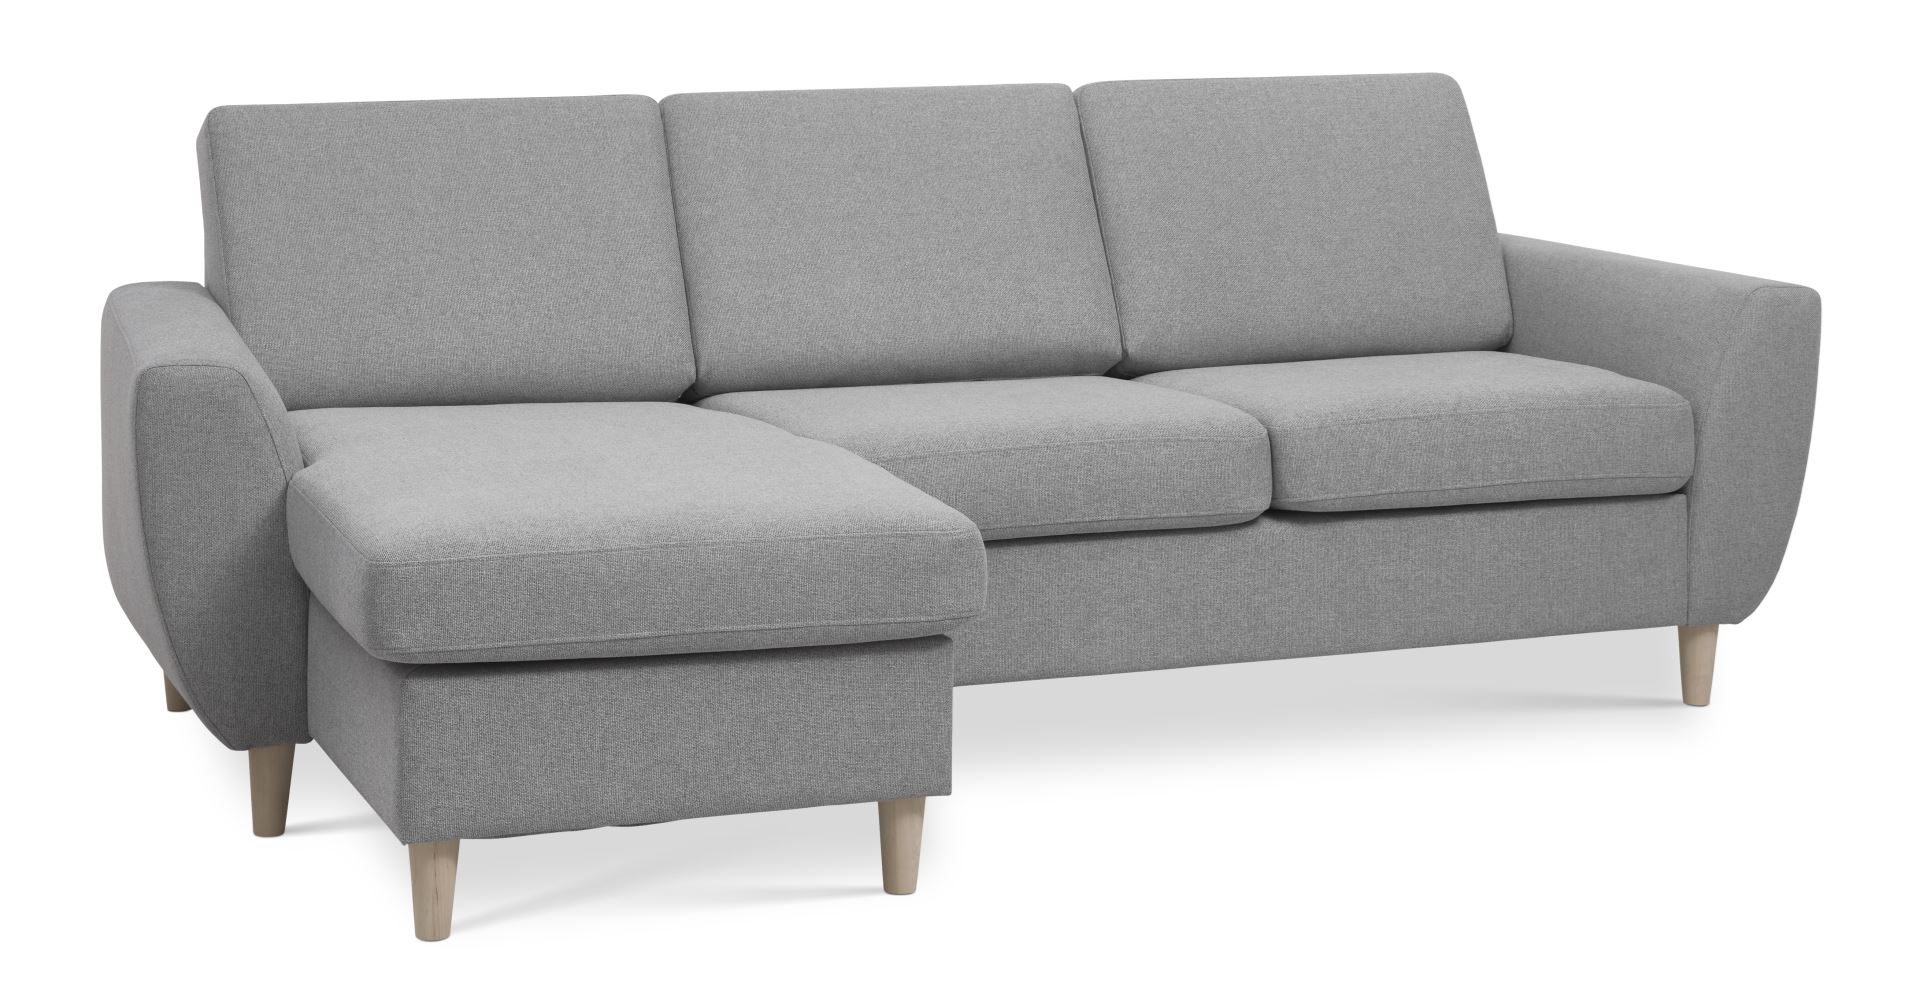 Wendy set 1 3D sofa, m. chaiselong - grå polyester stof og natur træ